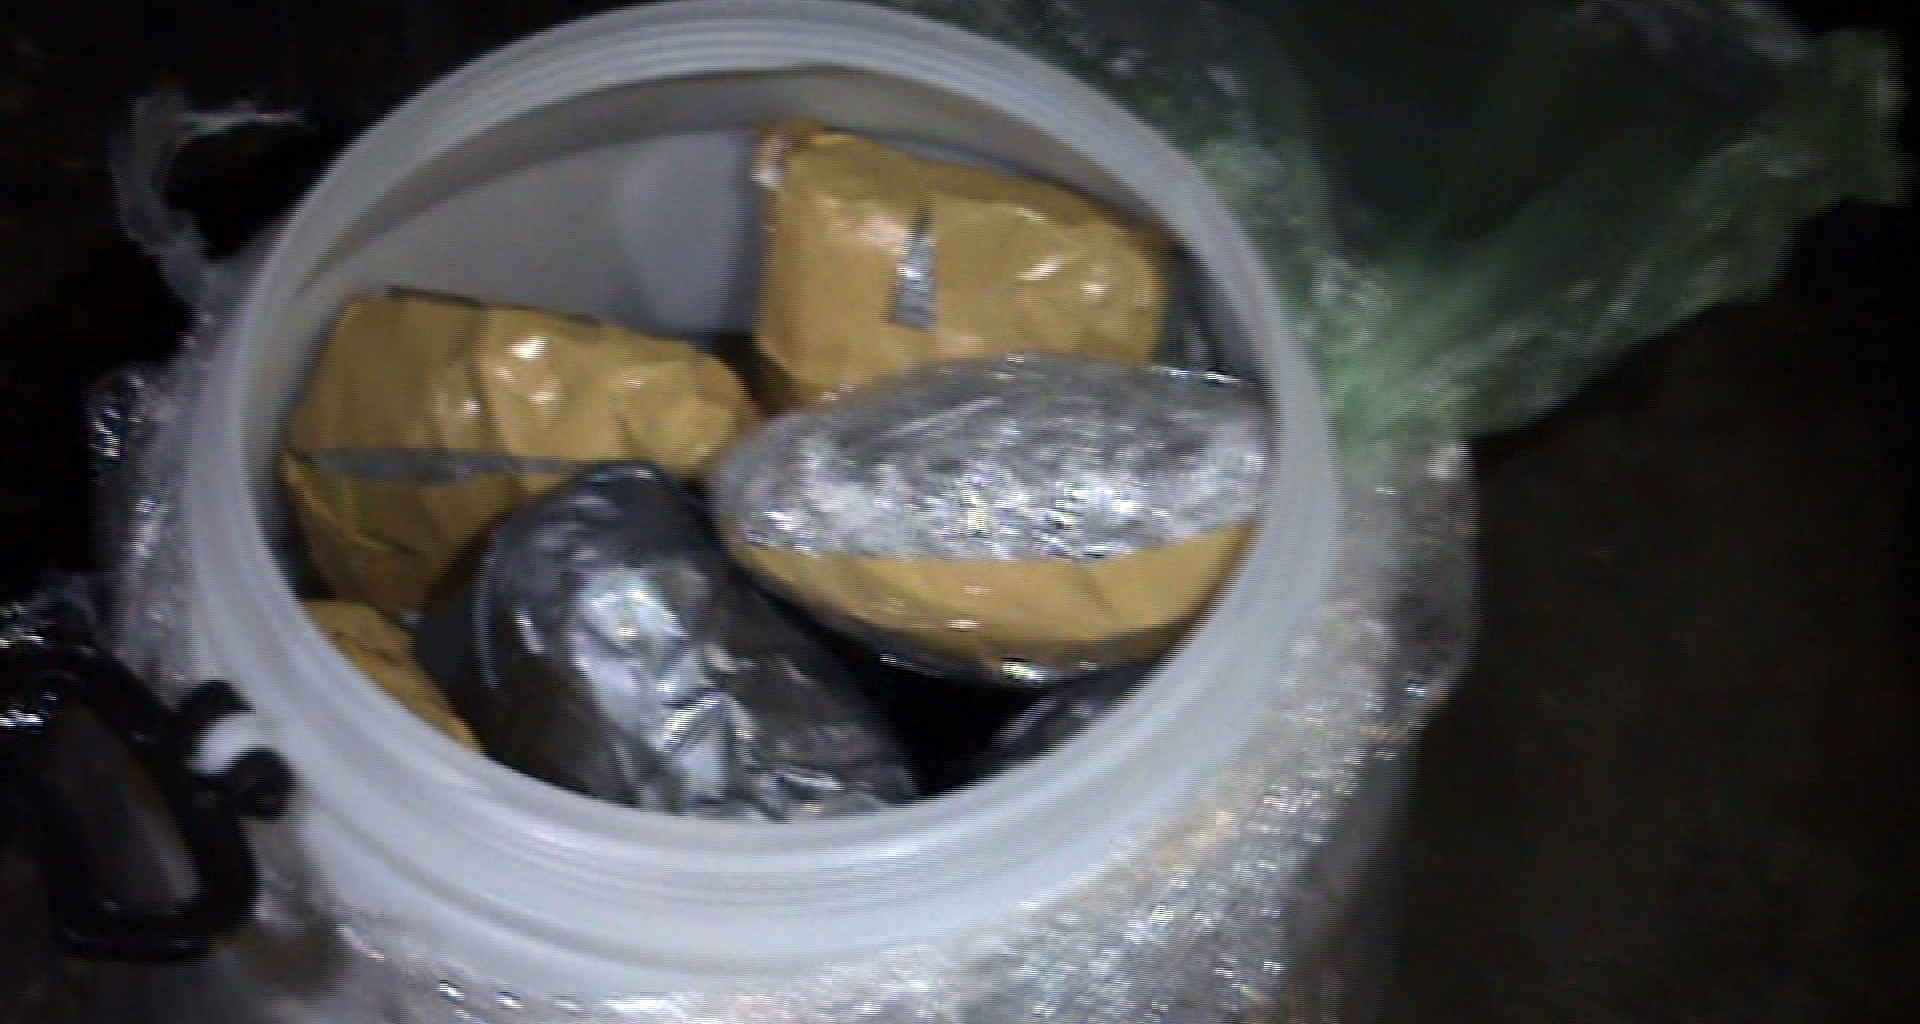 Zaplena oko 5 kg narkotika, uhapšene tri osobe